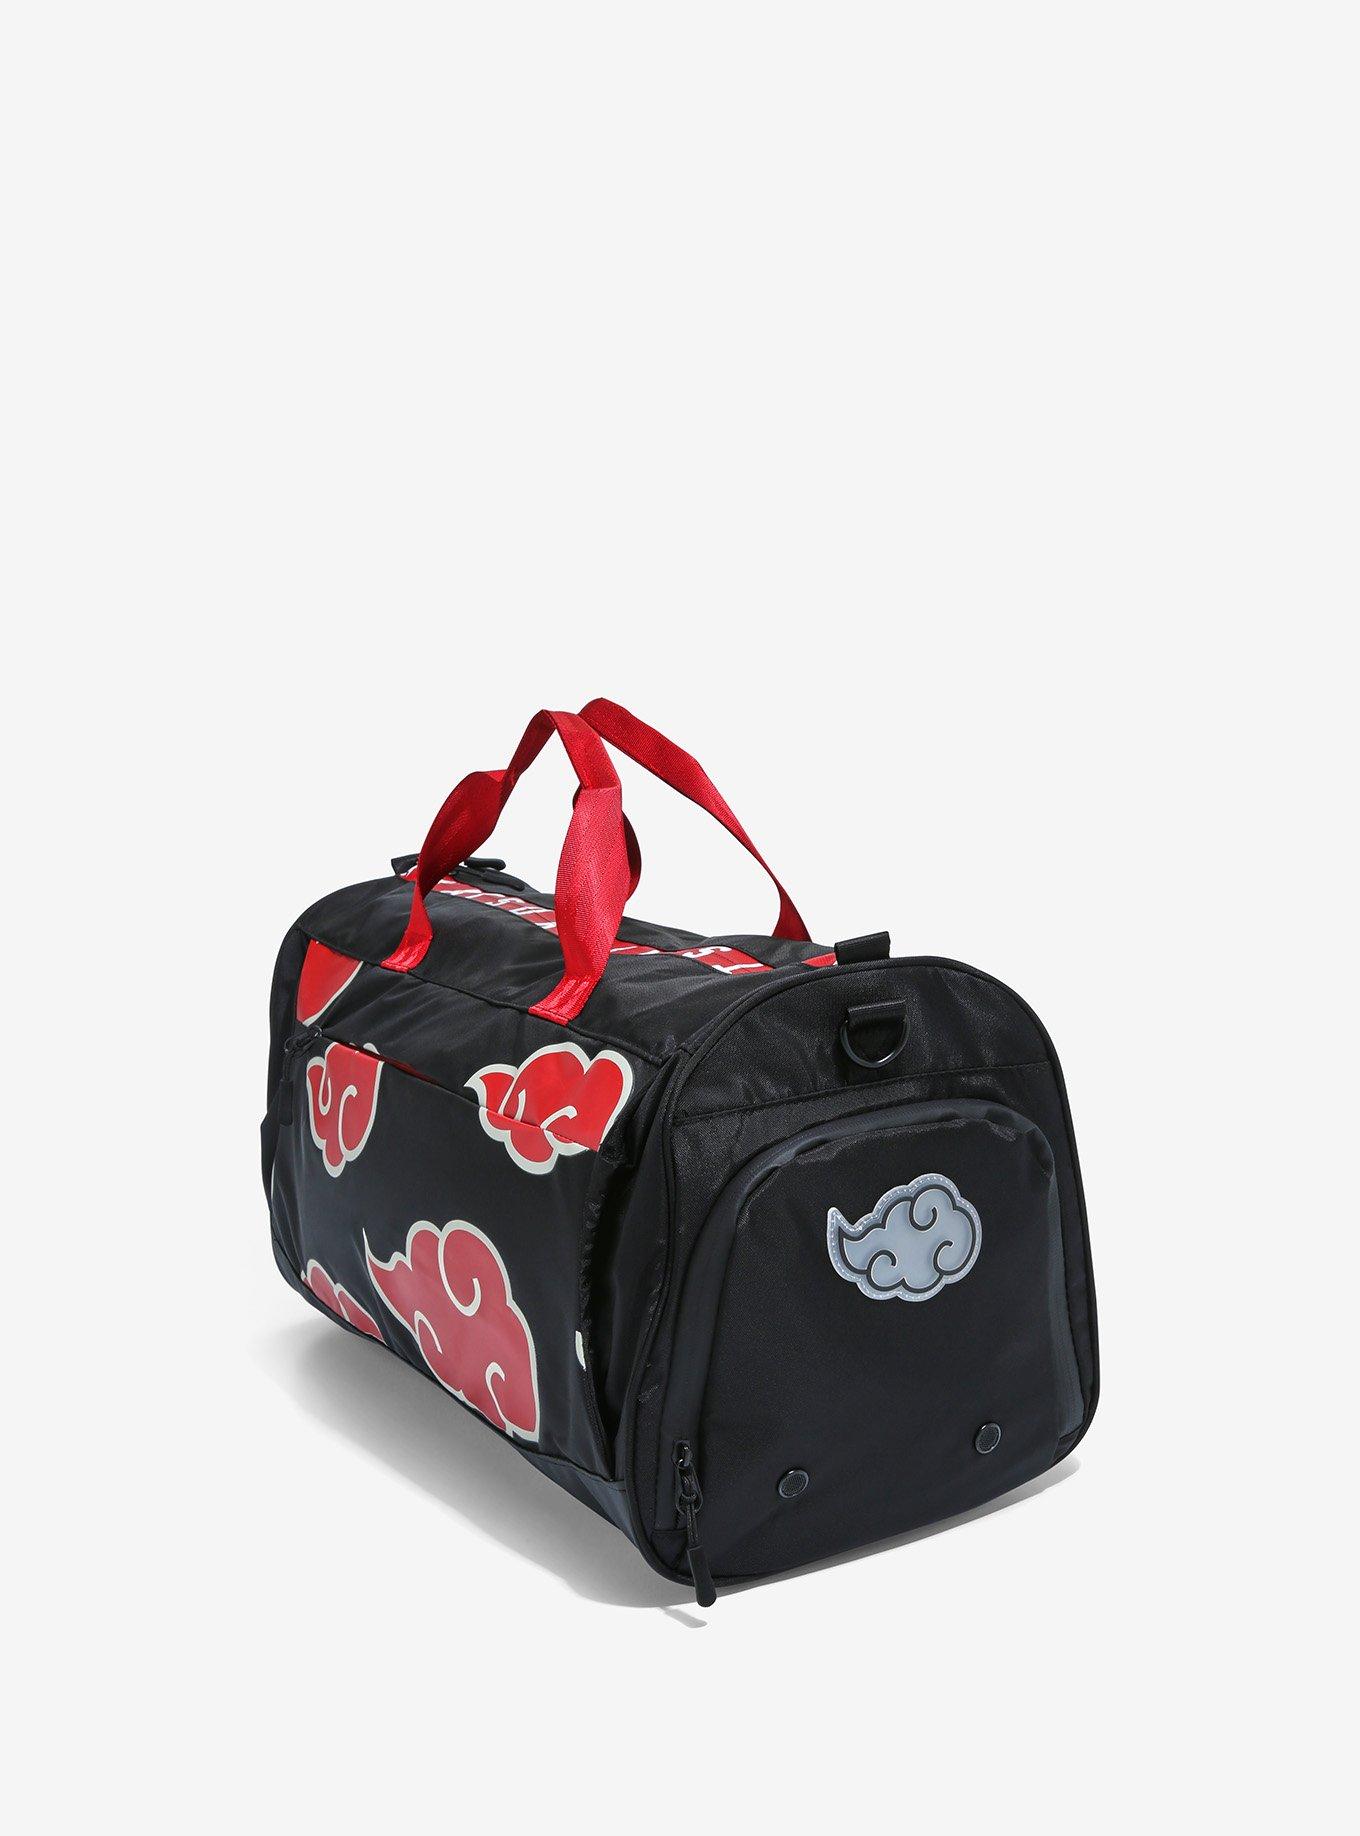 Naruto Shippuden Akatsuki Cloud Built-Up Backpack - BoxLunch Exclusive